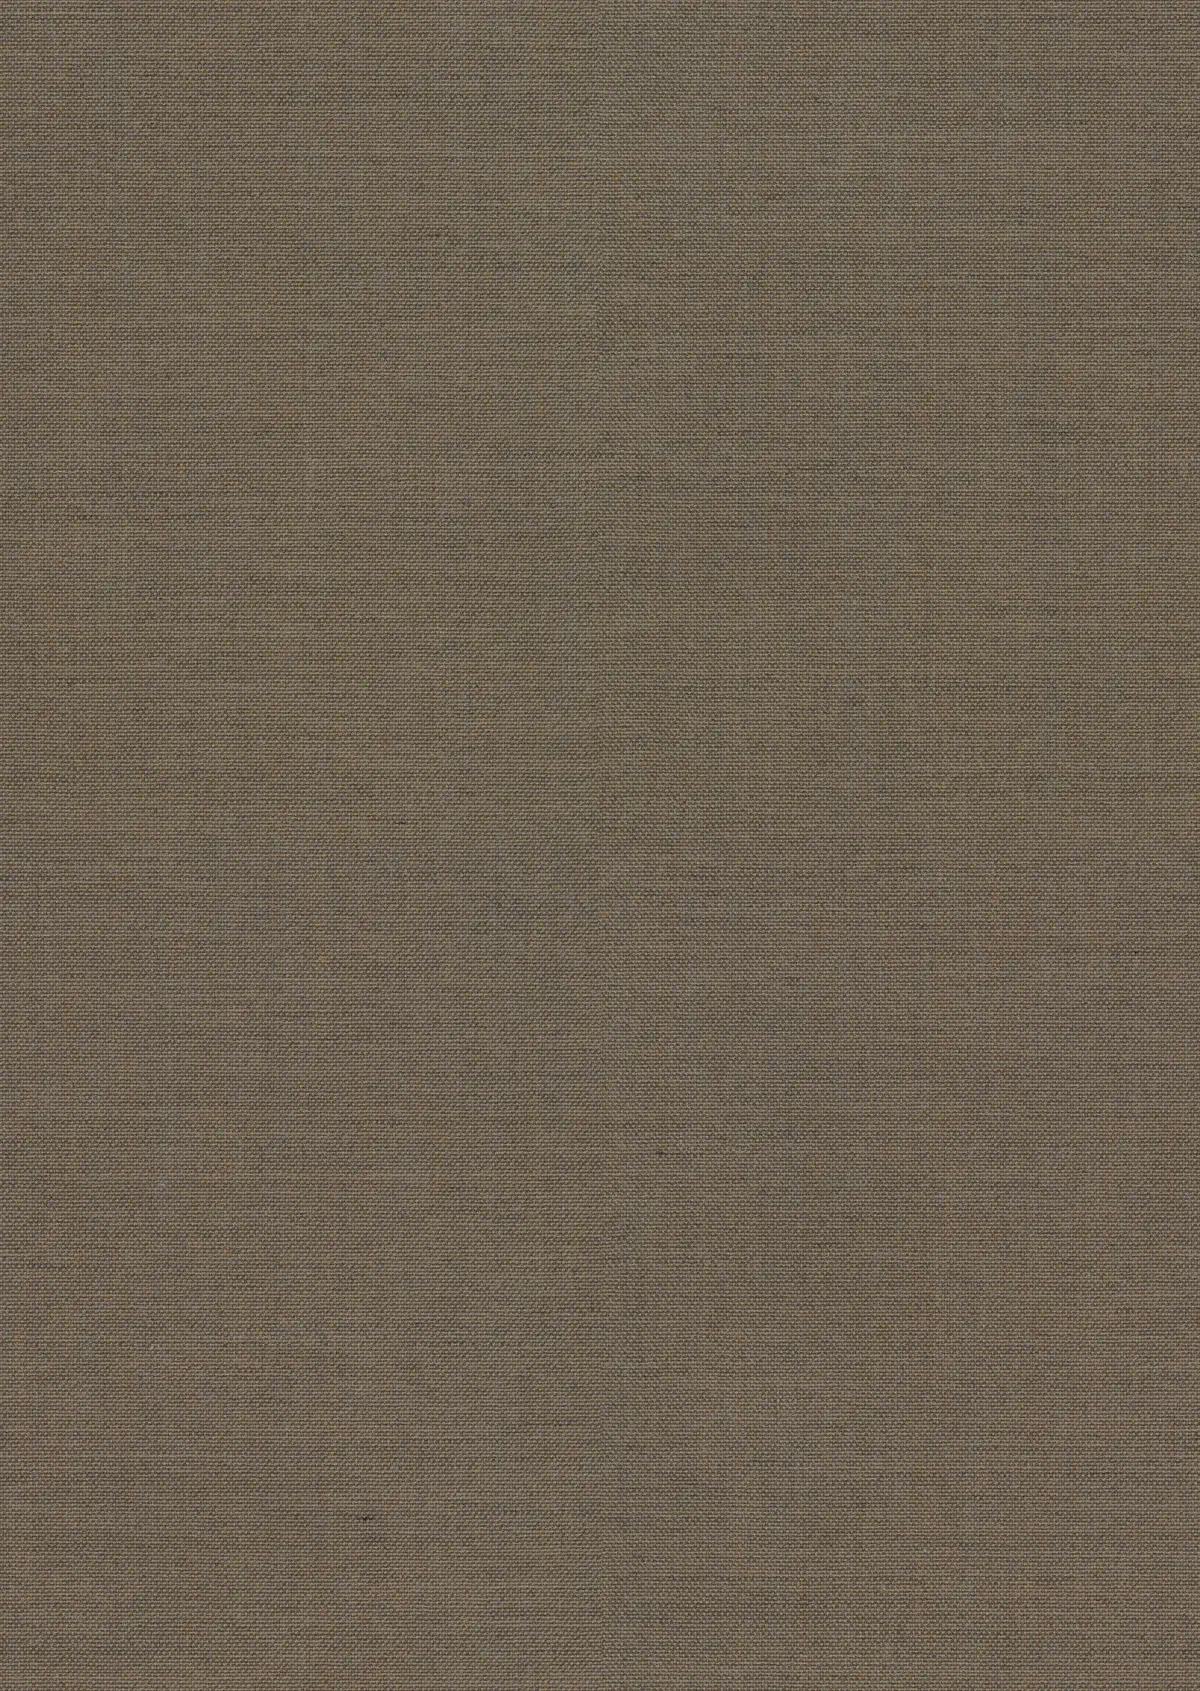 Fabric sample Remix 3 233 brown